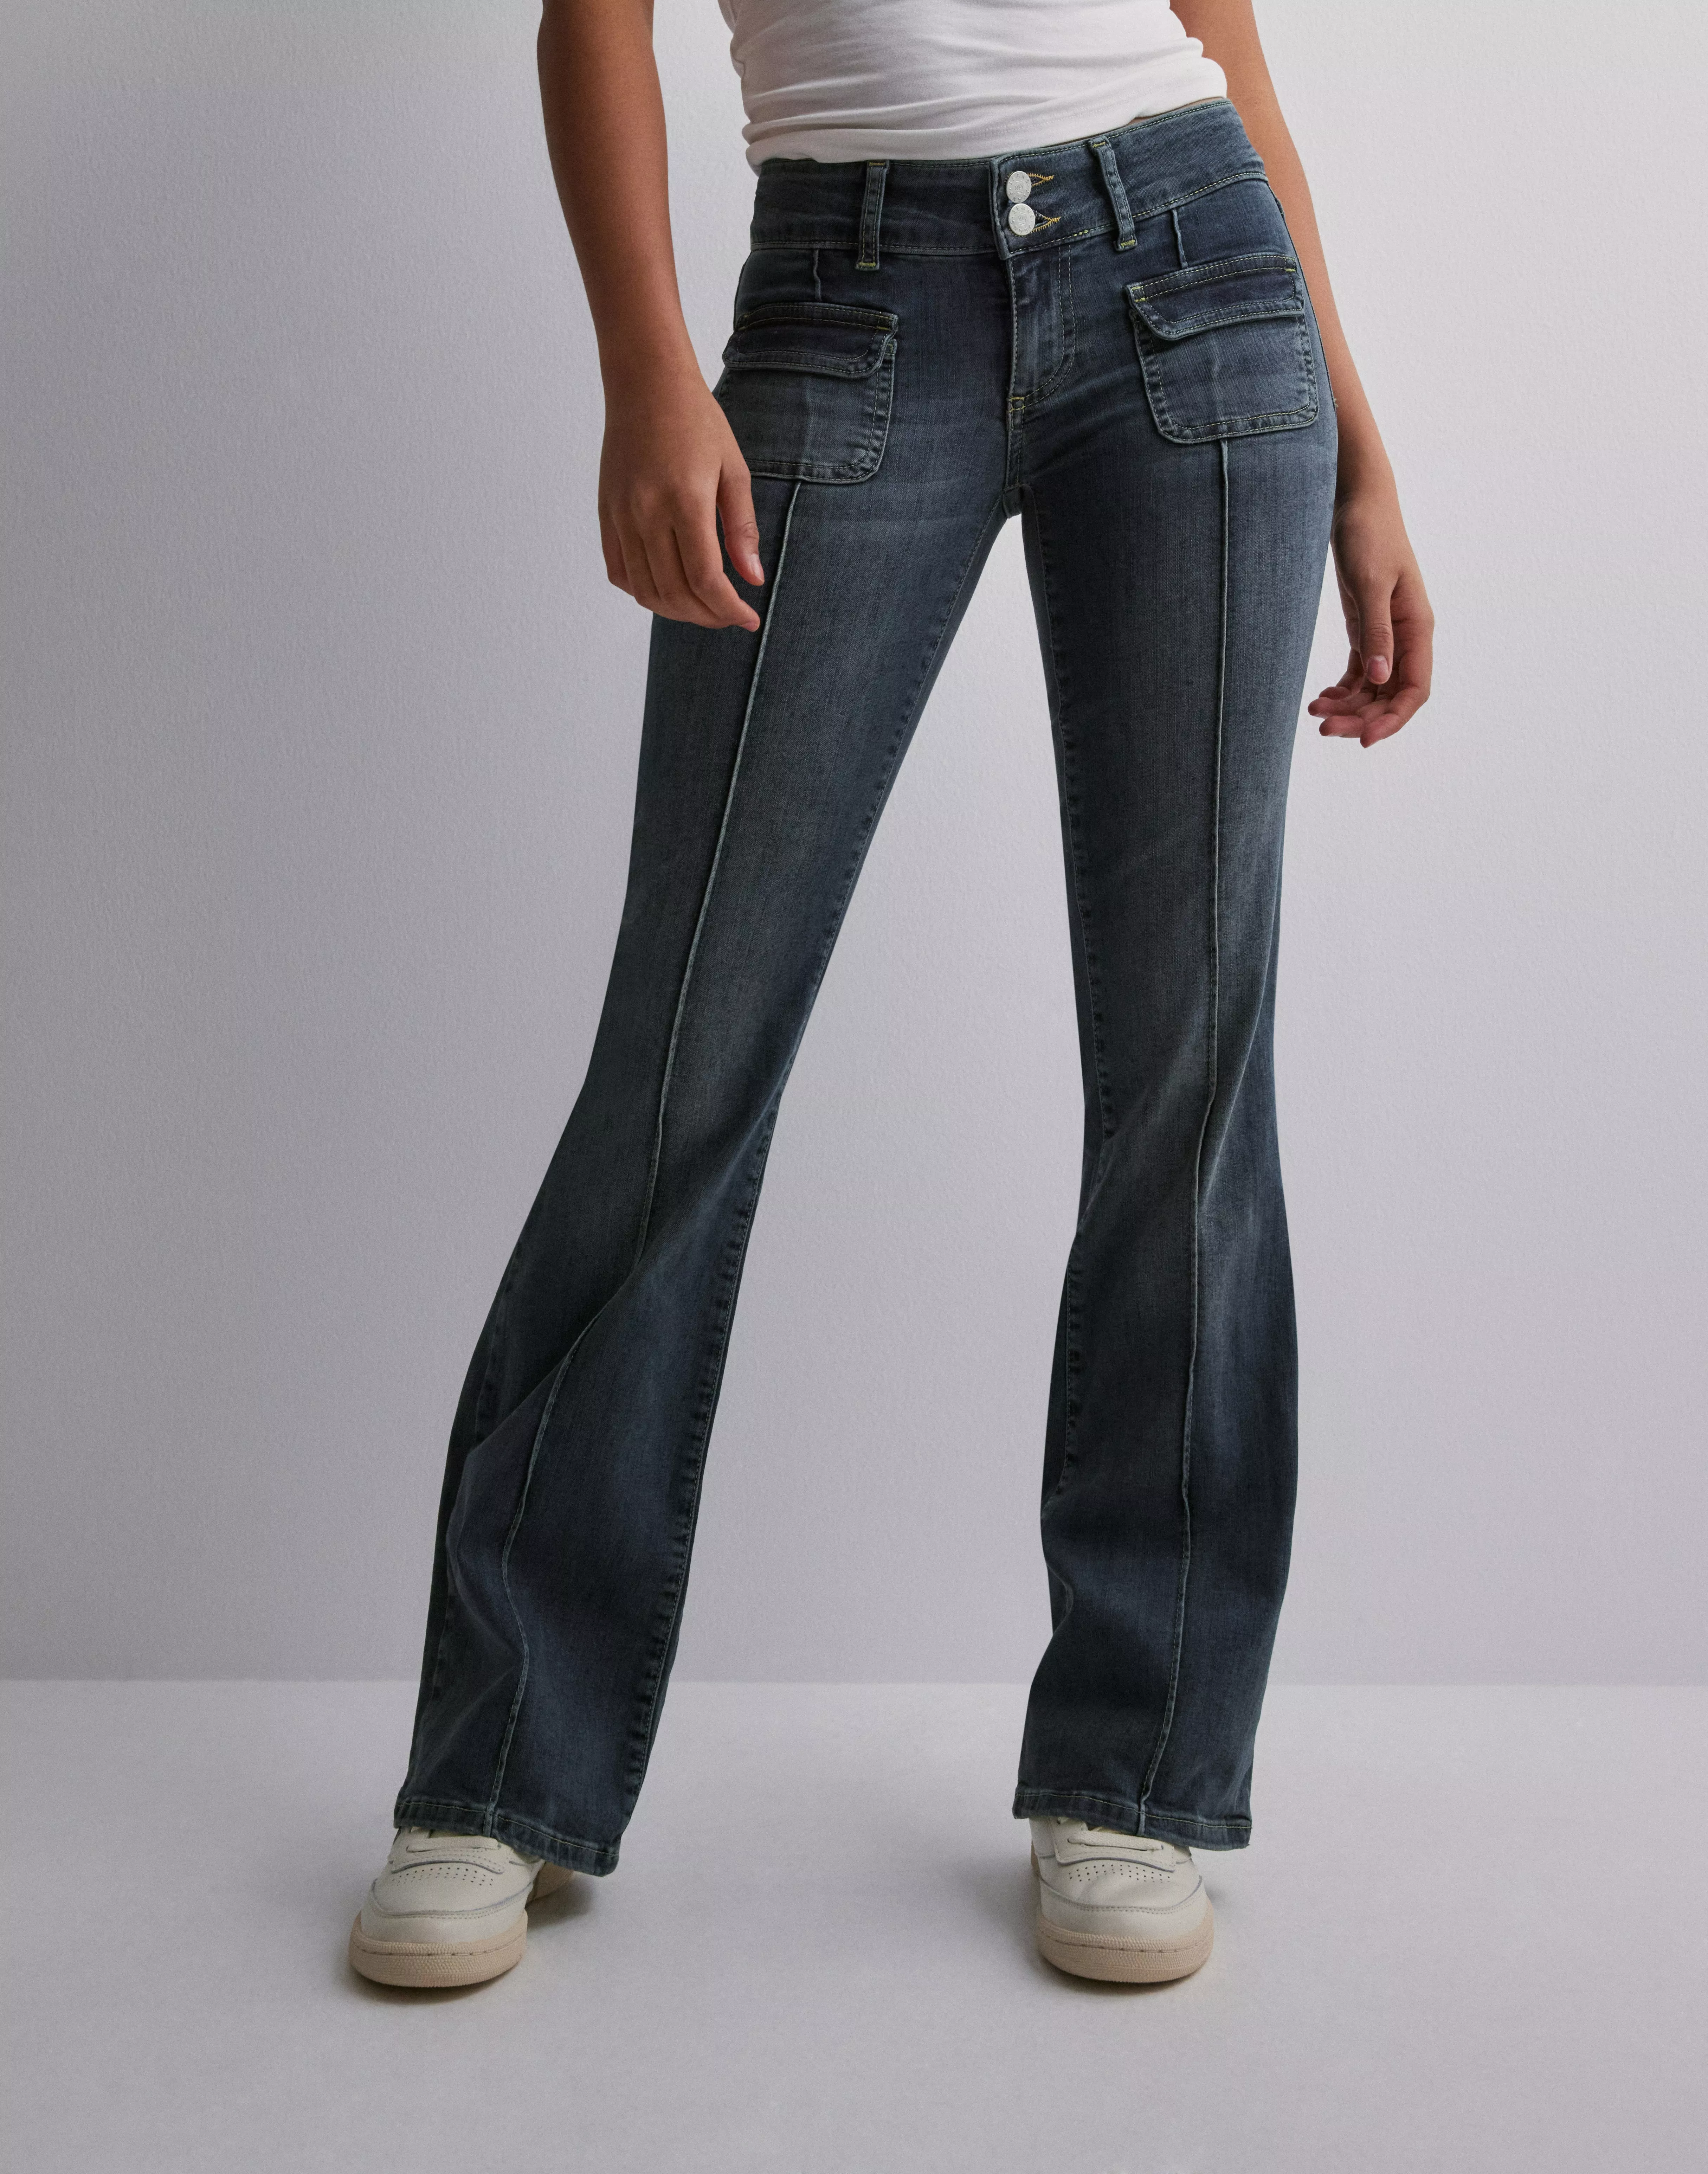 Womens Denim Jeans Bootcut Flared Pants Low Waist Wide Leg